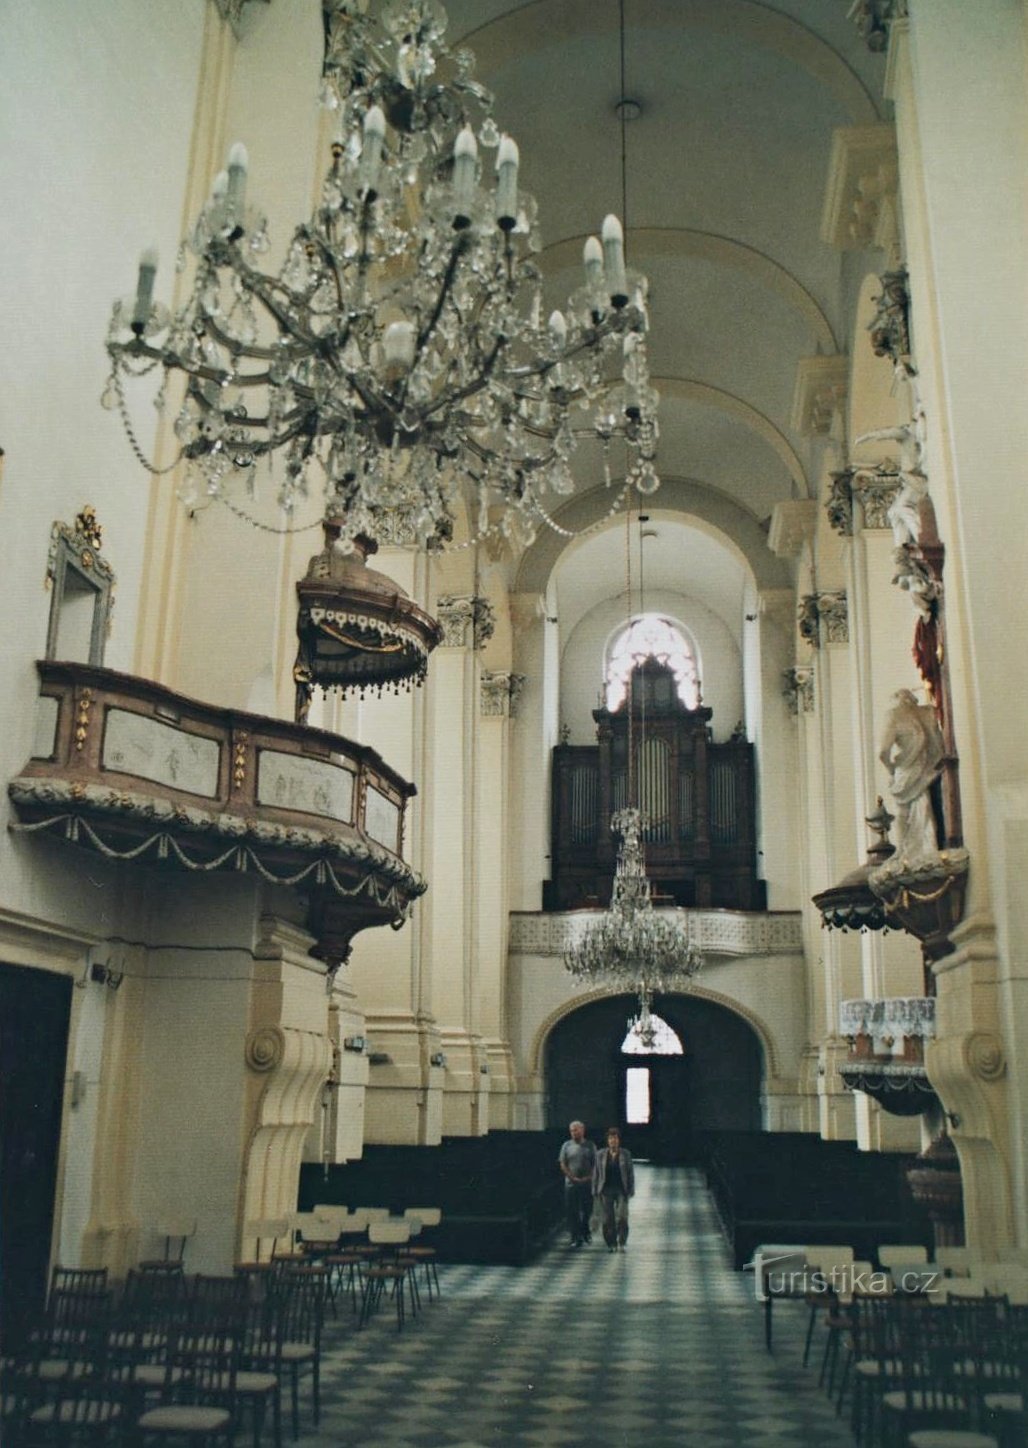 katedralens inre